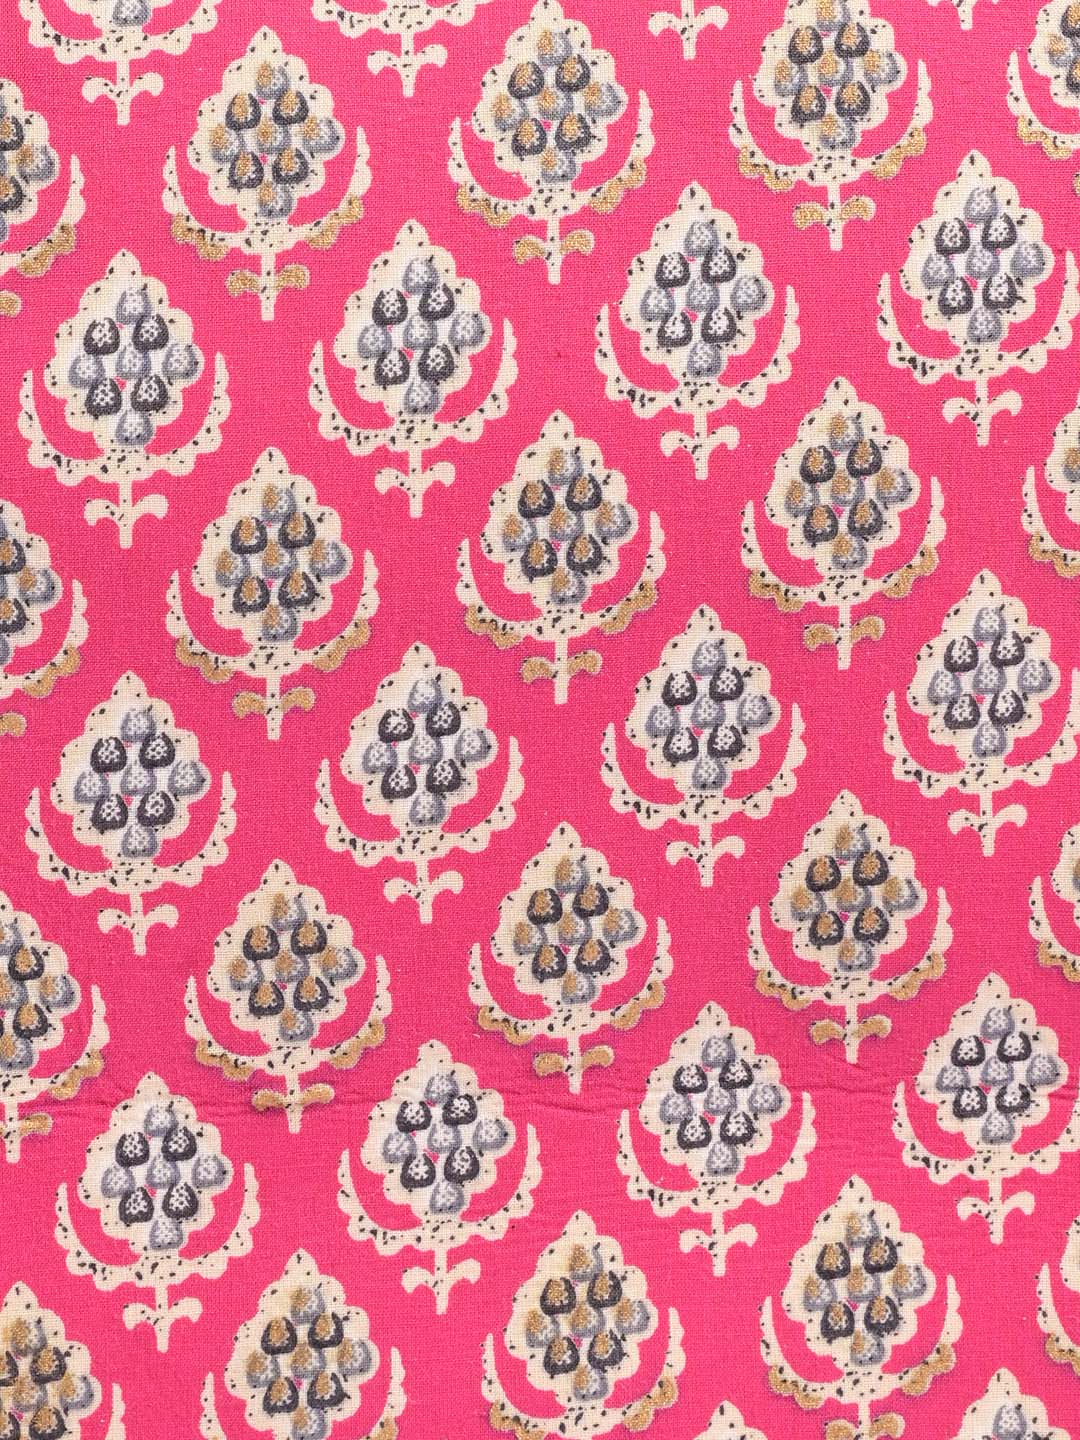 Pink Printed Cotton Handbag With Clutch